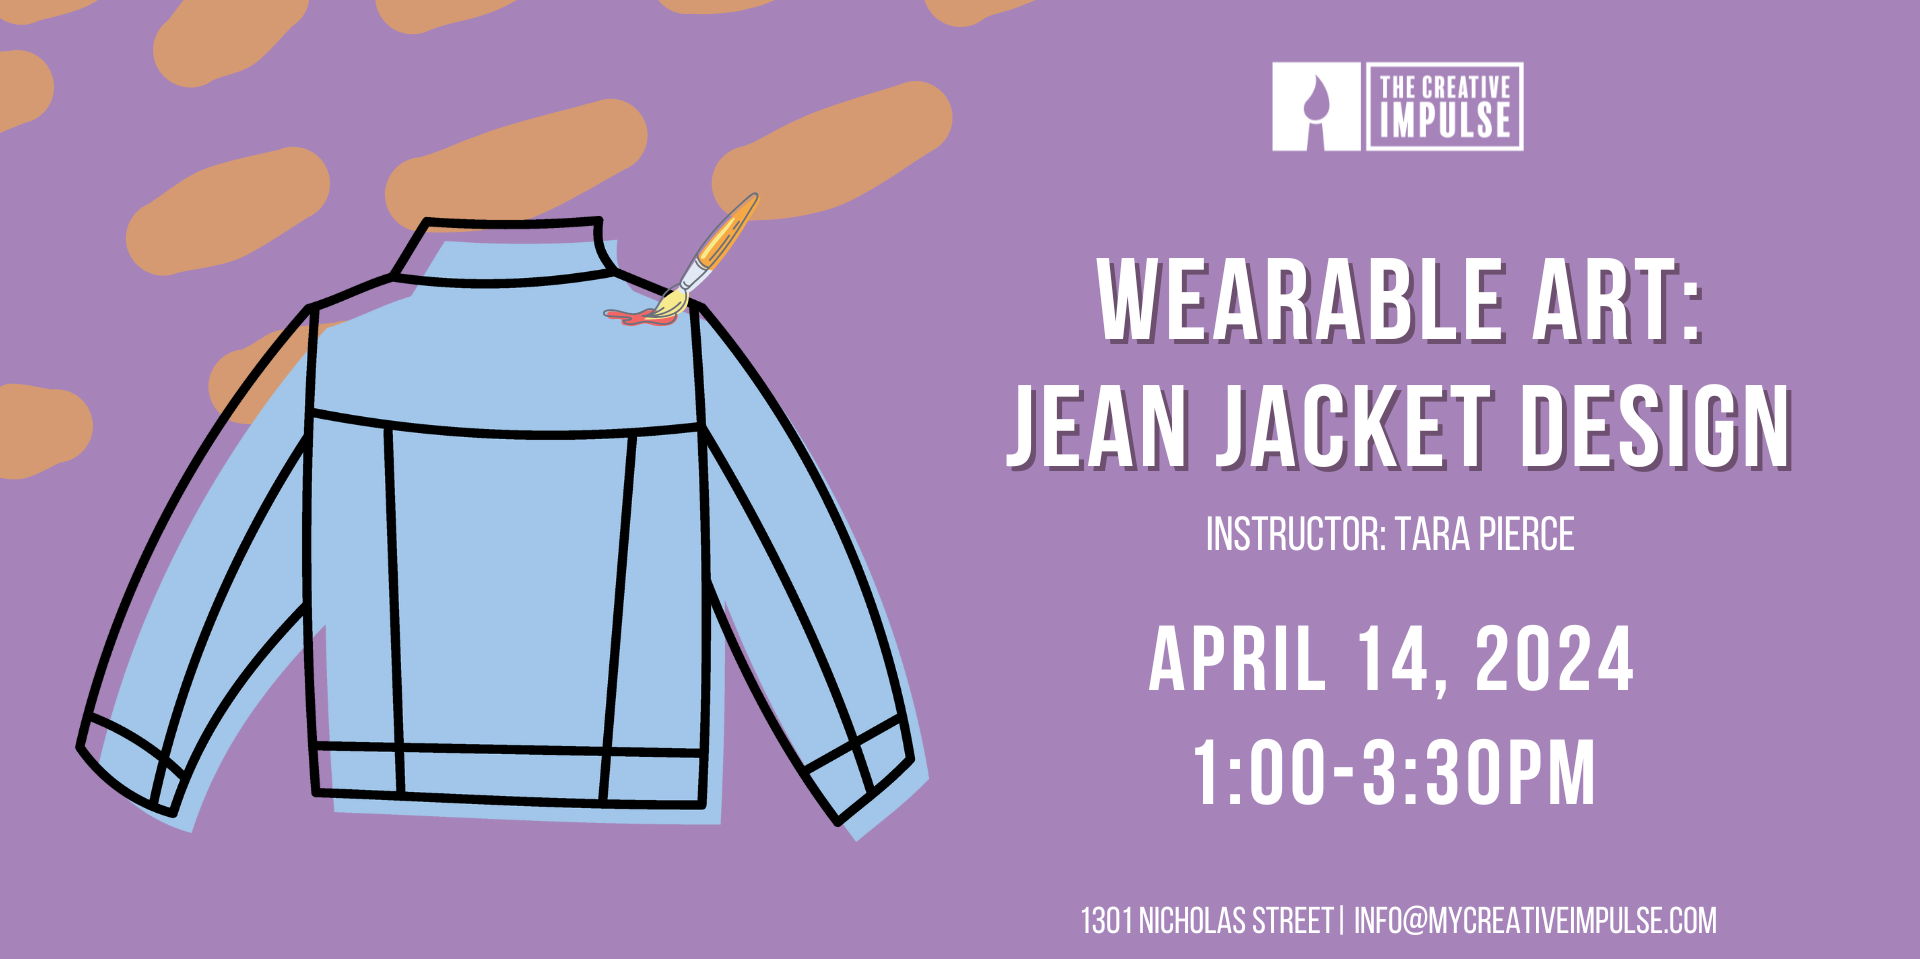 Wearable Art: Jean Jacket Design promotional image